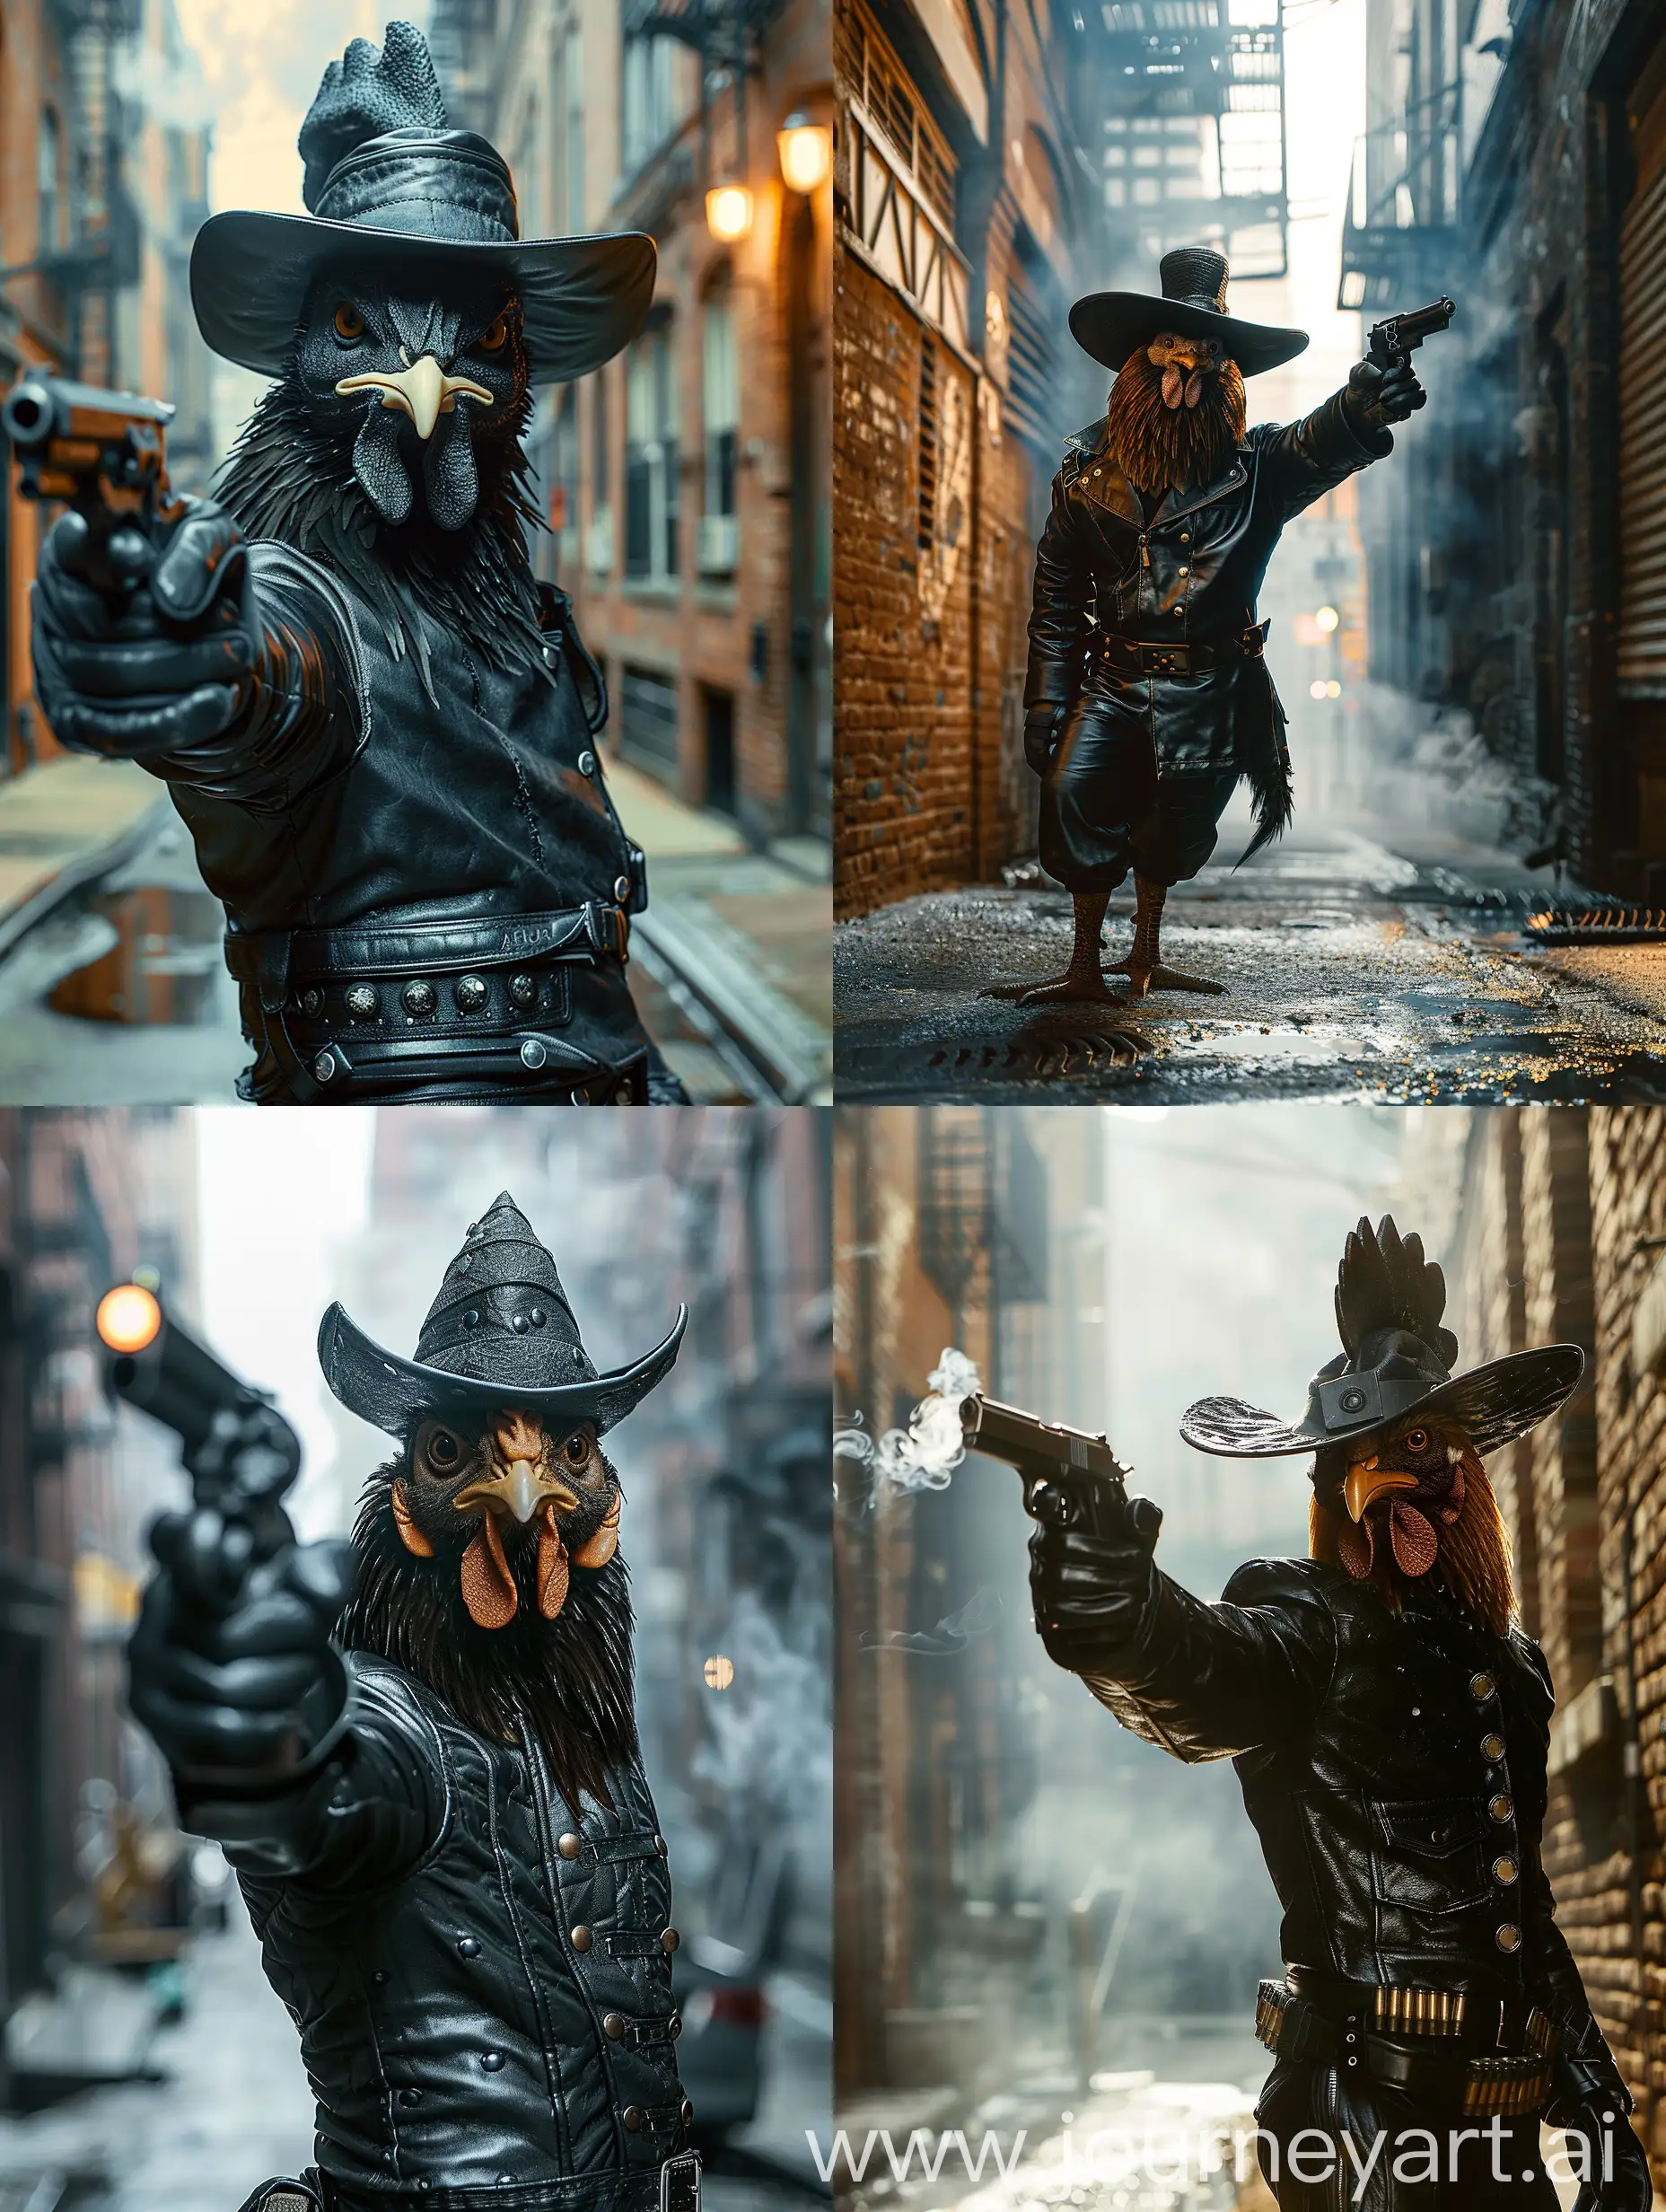 Anthropomorphic-Rooster-Bandit-Pointing-Gun-in-Metropolis-Alley